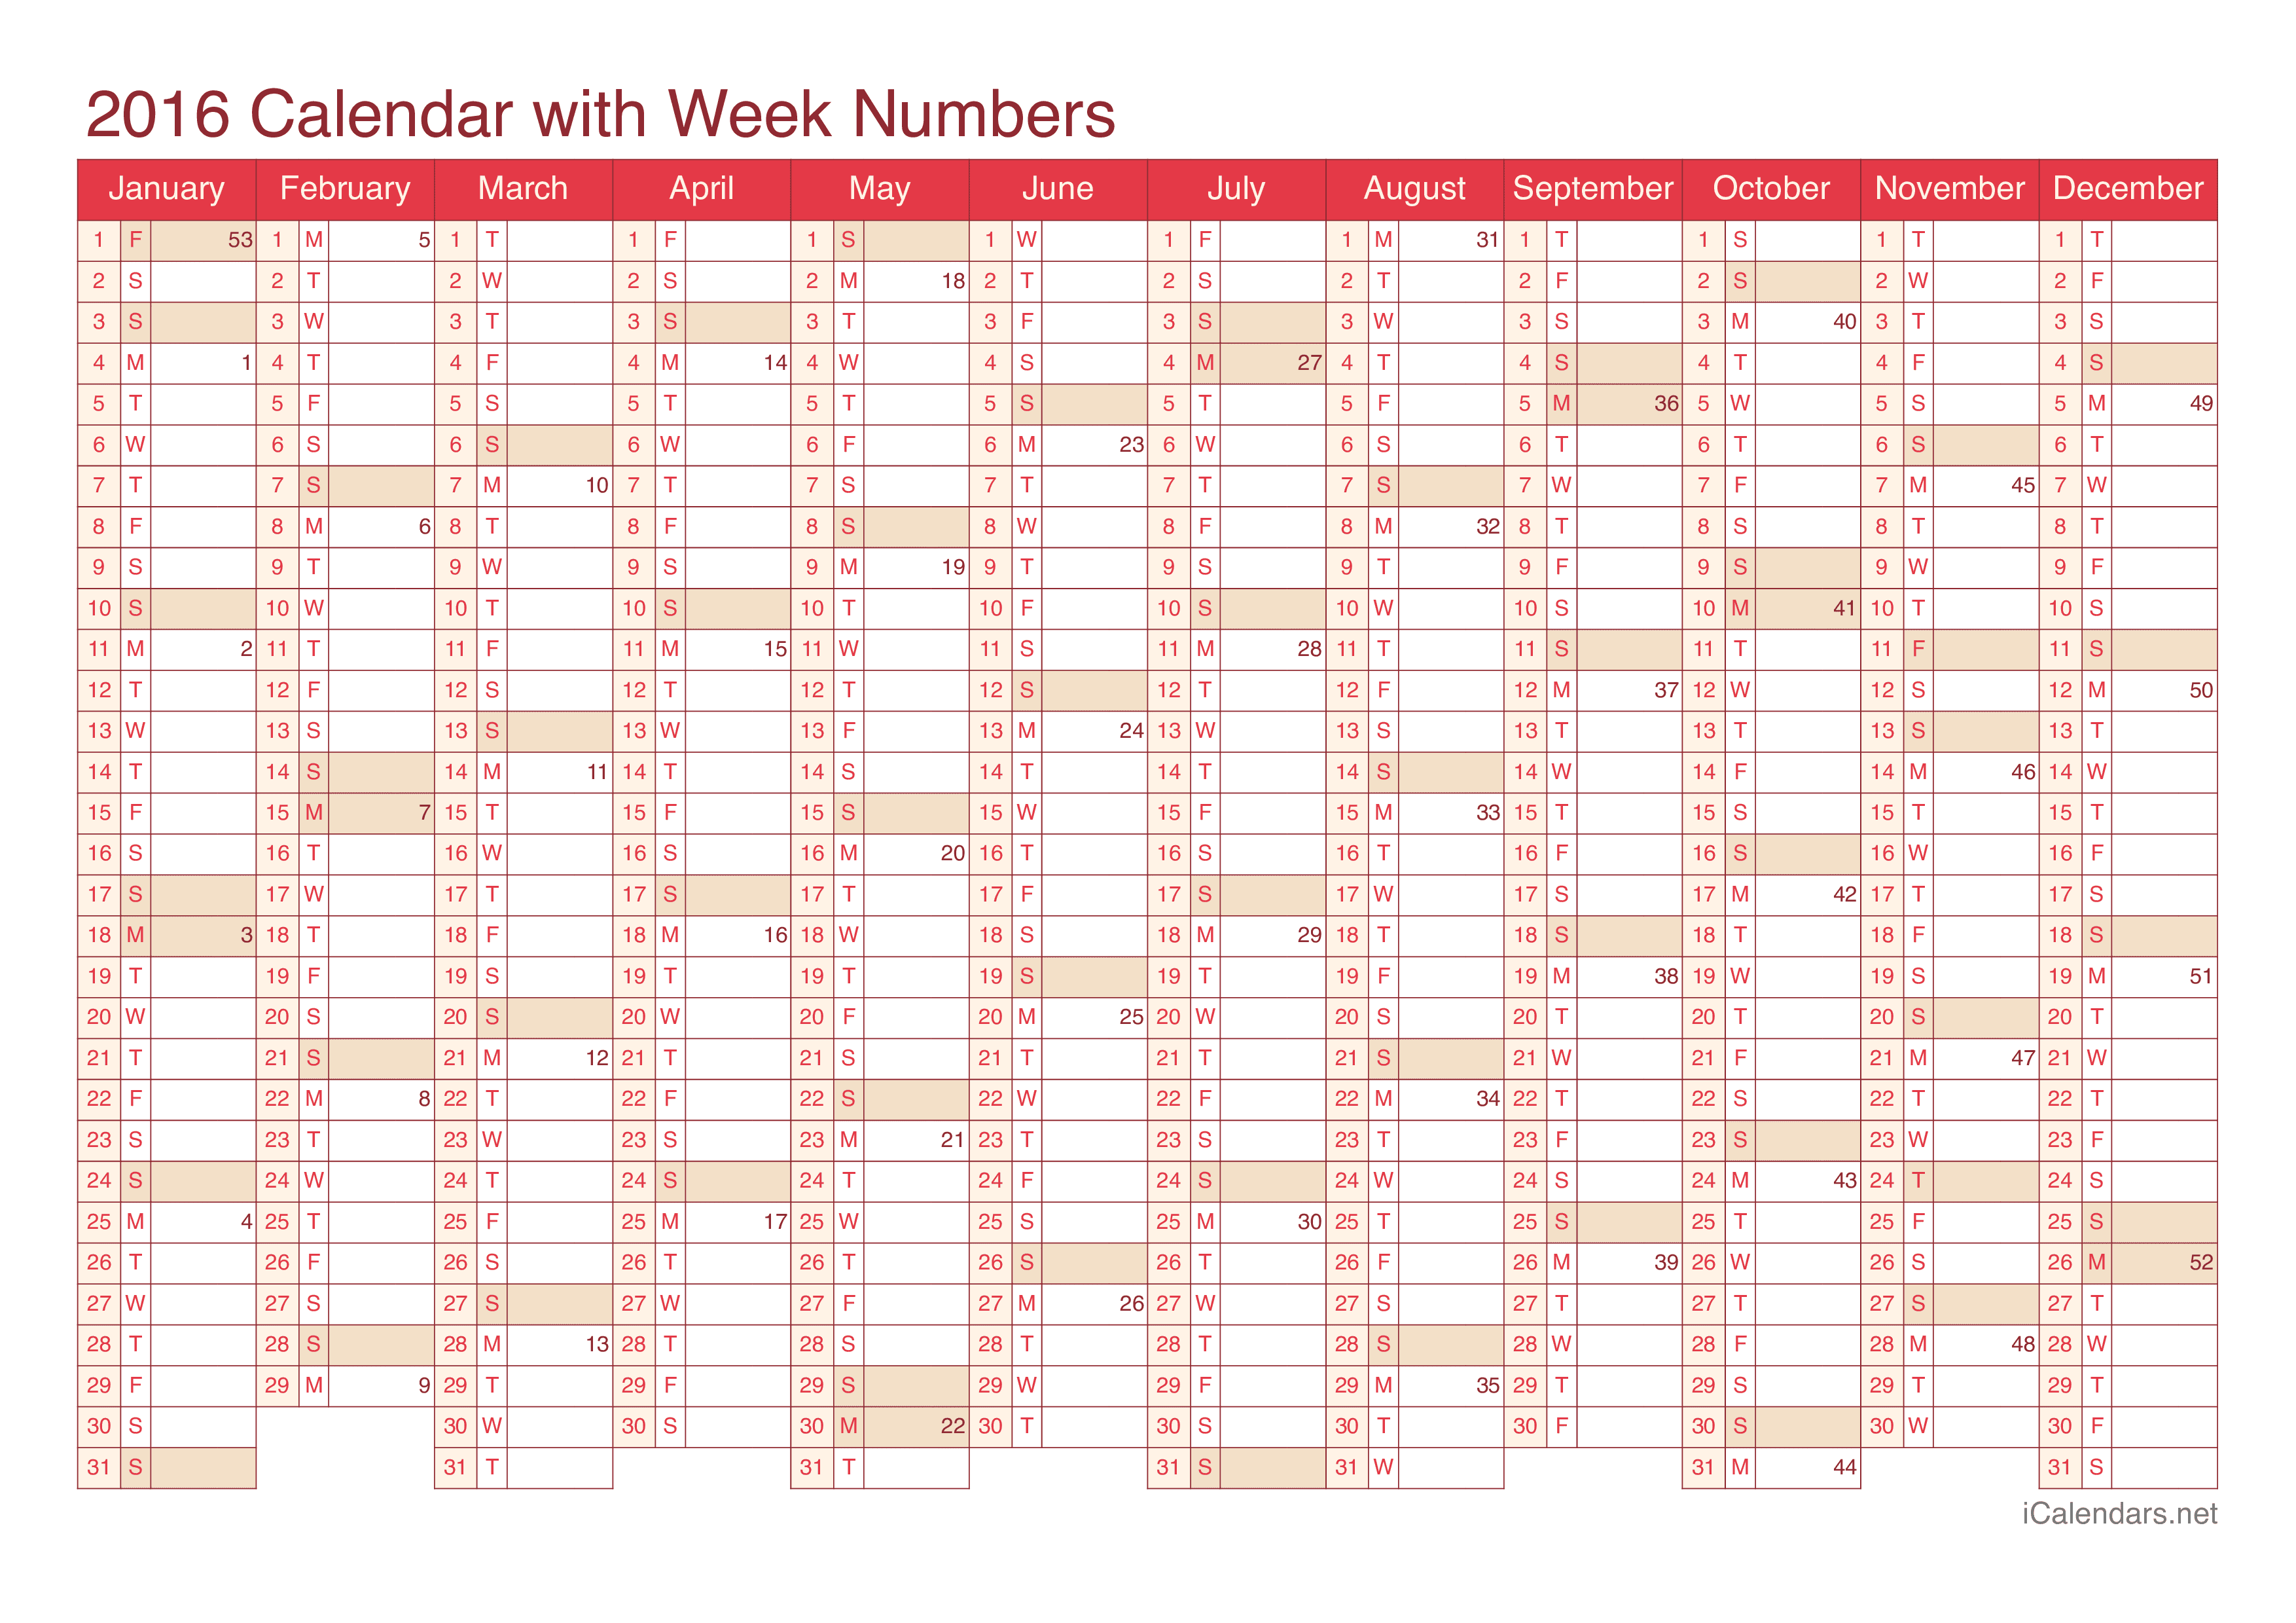 2016 Calendar with week numbers - Cherry